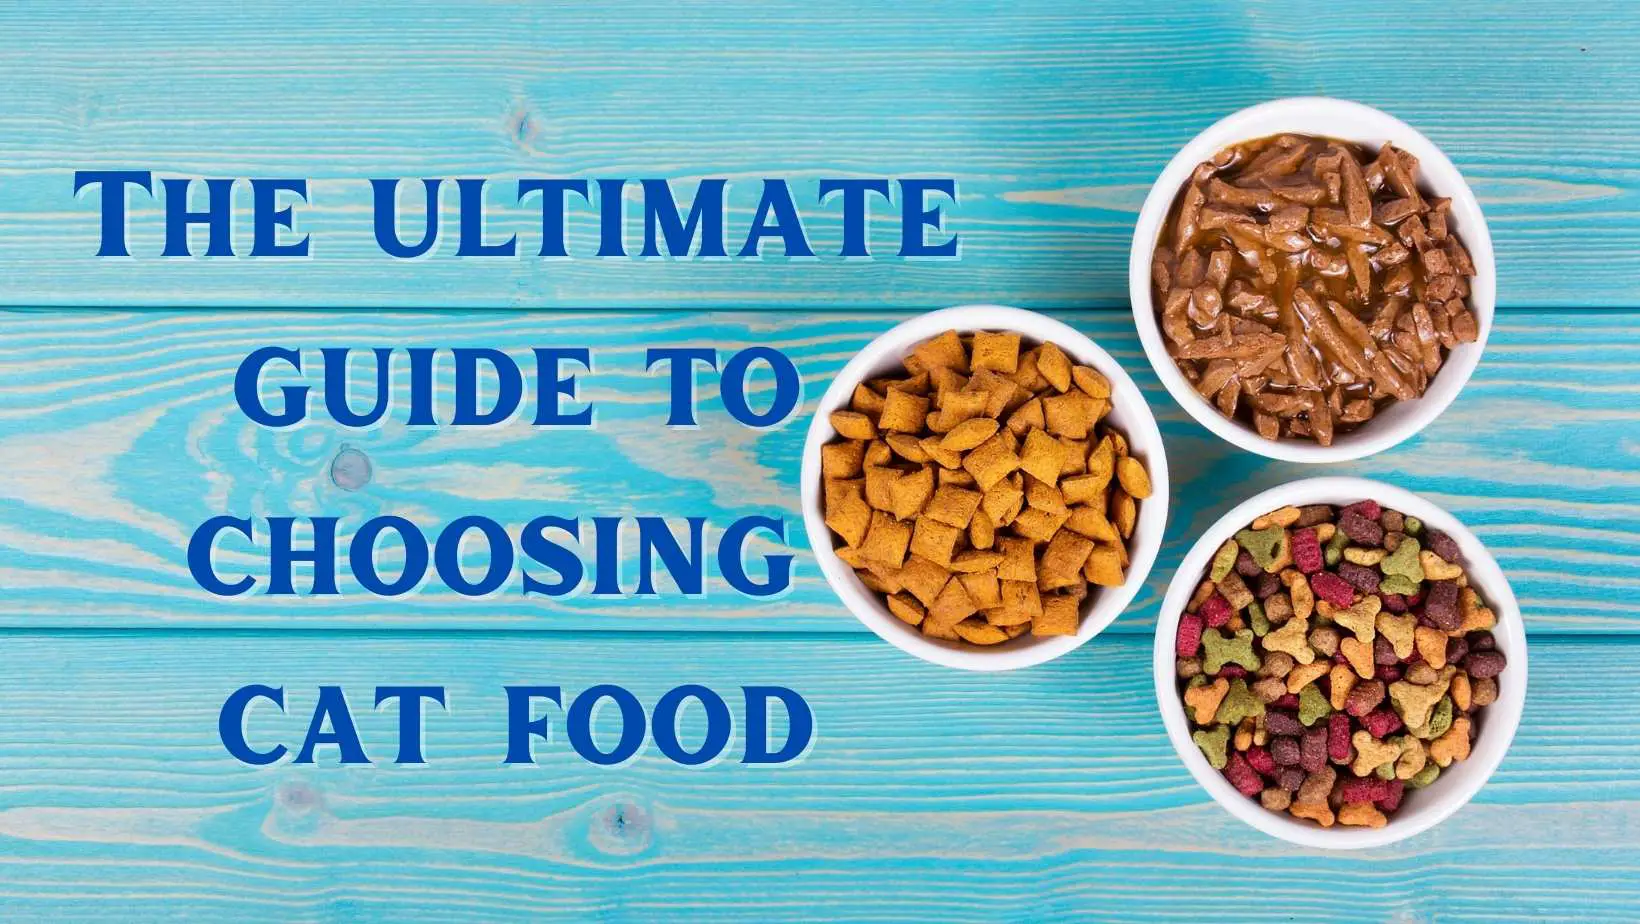 The ultimate guide to choosing cat food. | Cat Food